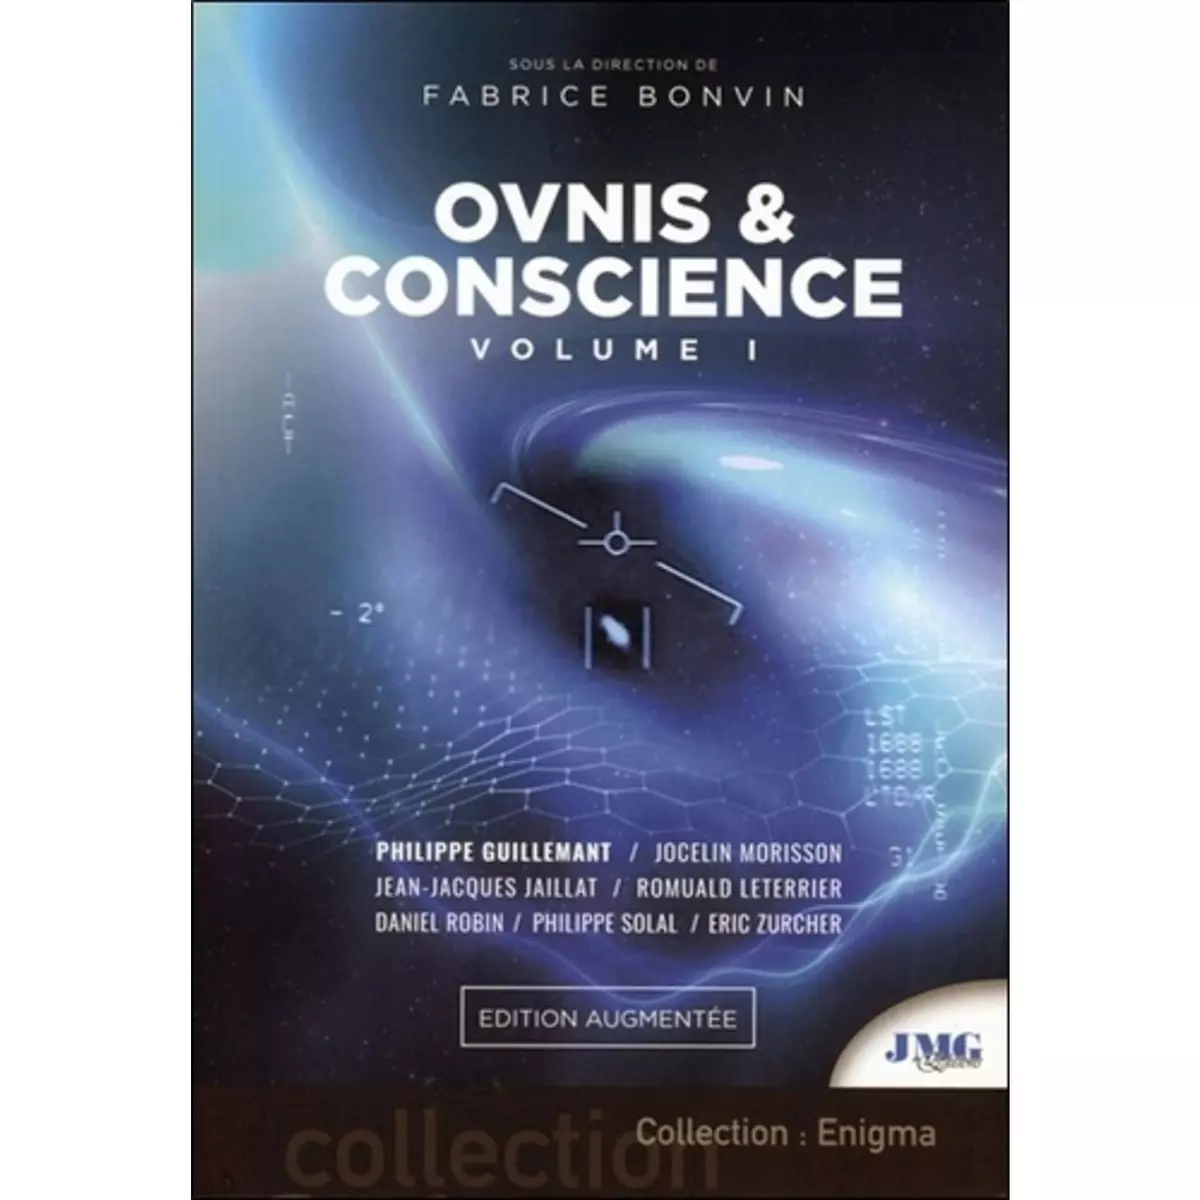  OVNIS & CONSCIENCE. VOLUME 1, EDITION REVUE ET AUGMENTEE, Bonvin Fabrice